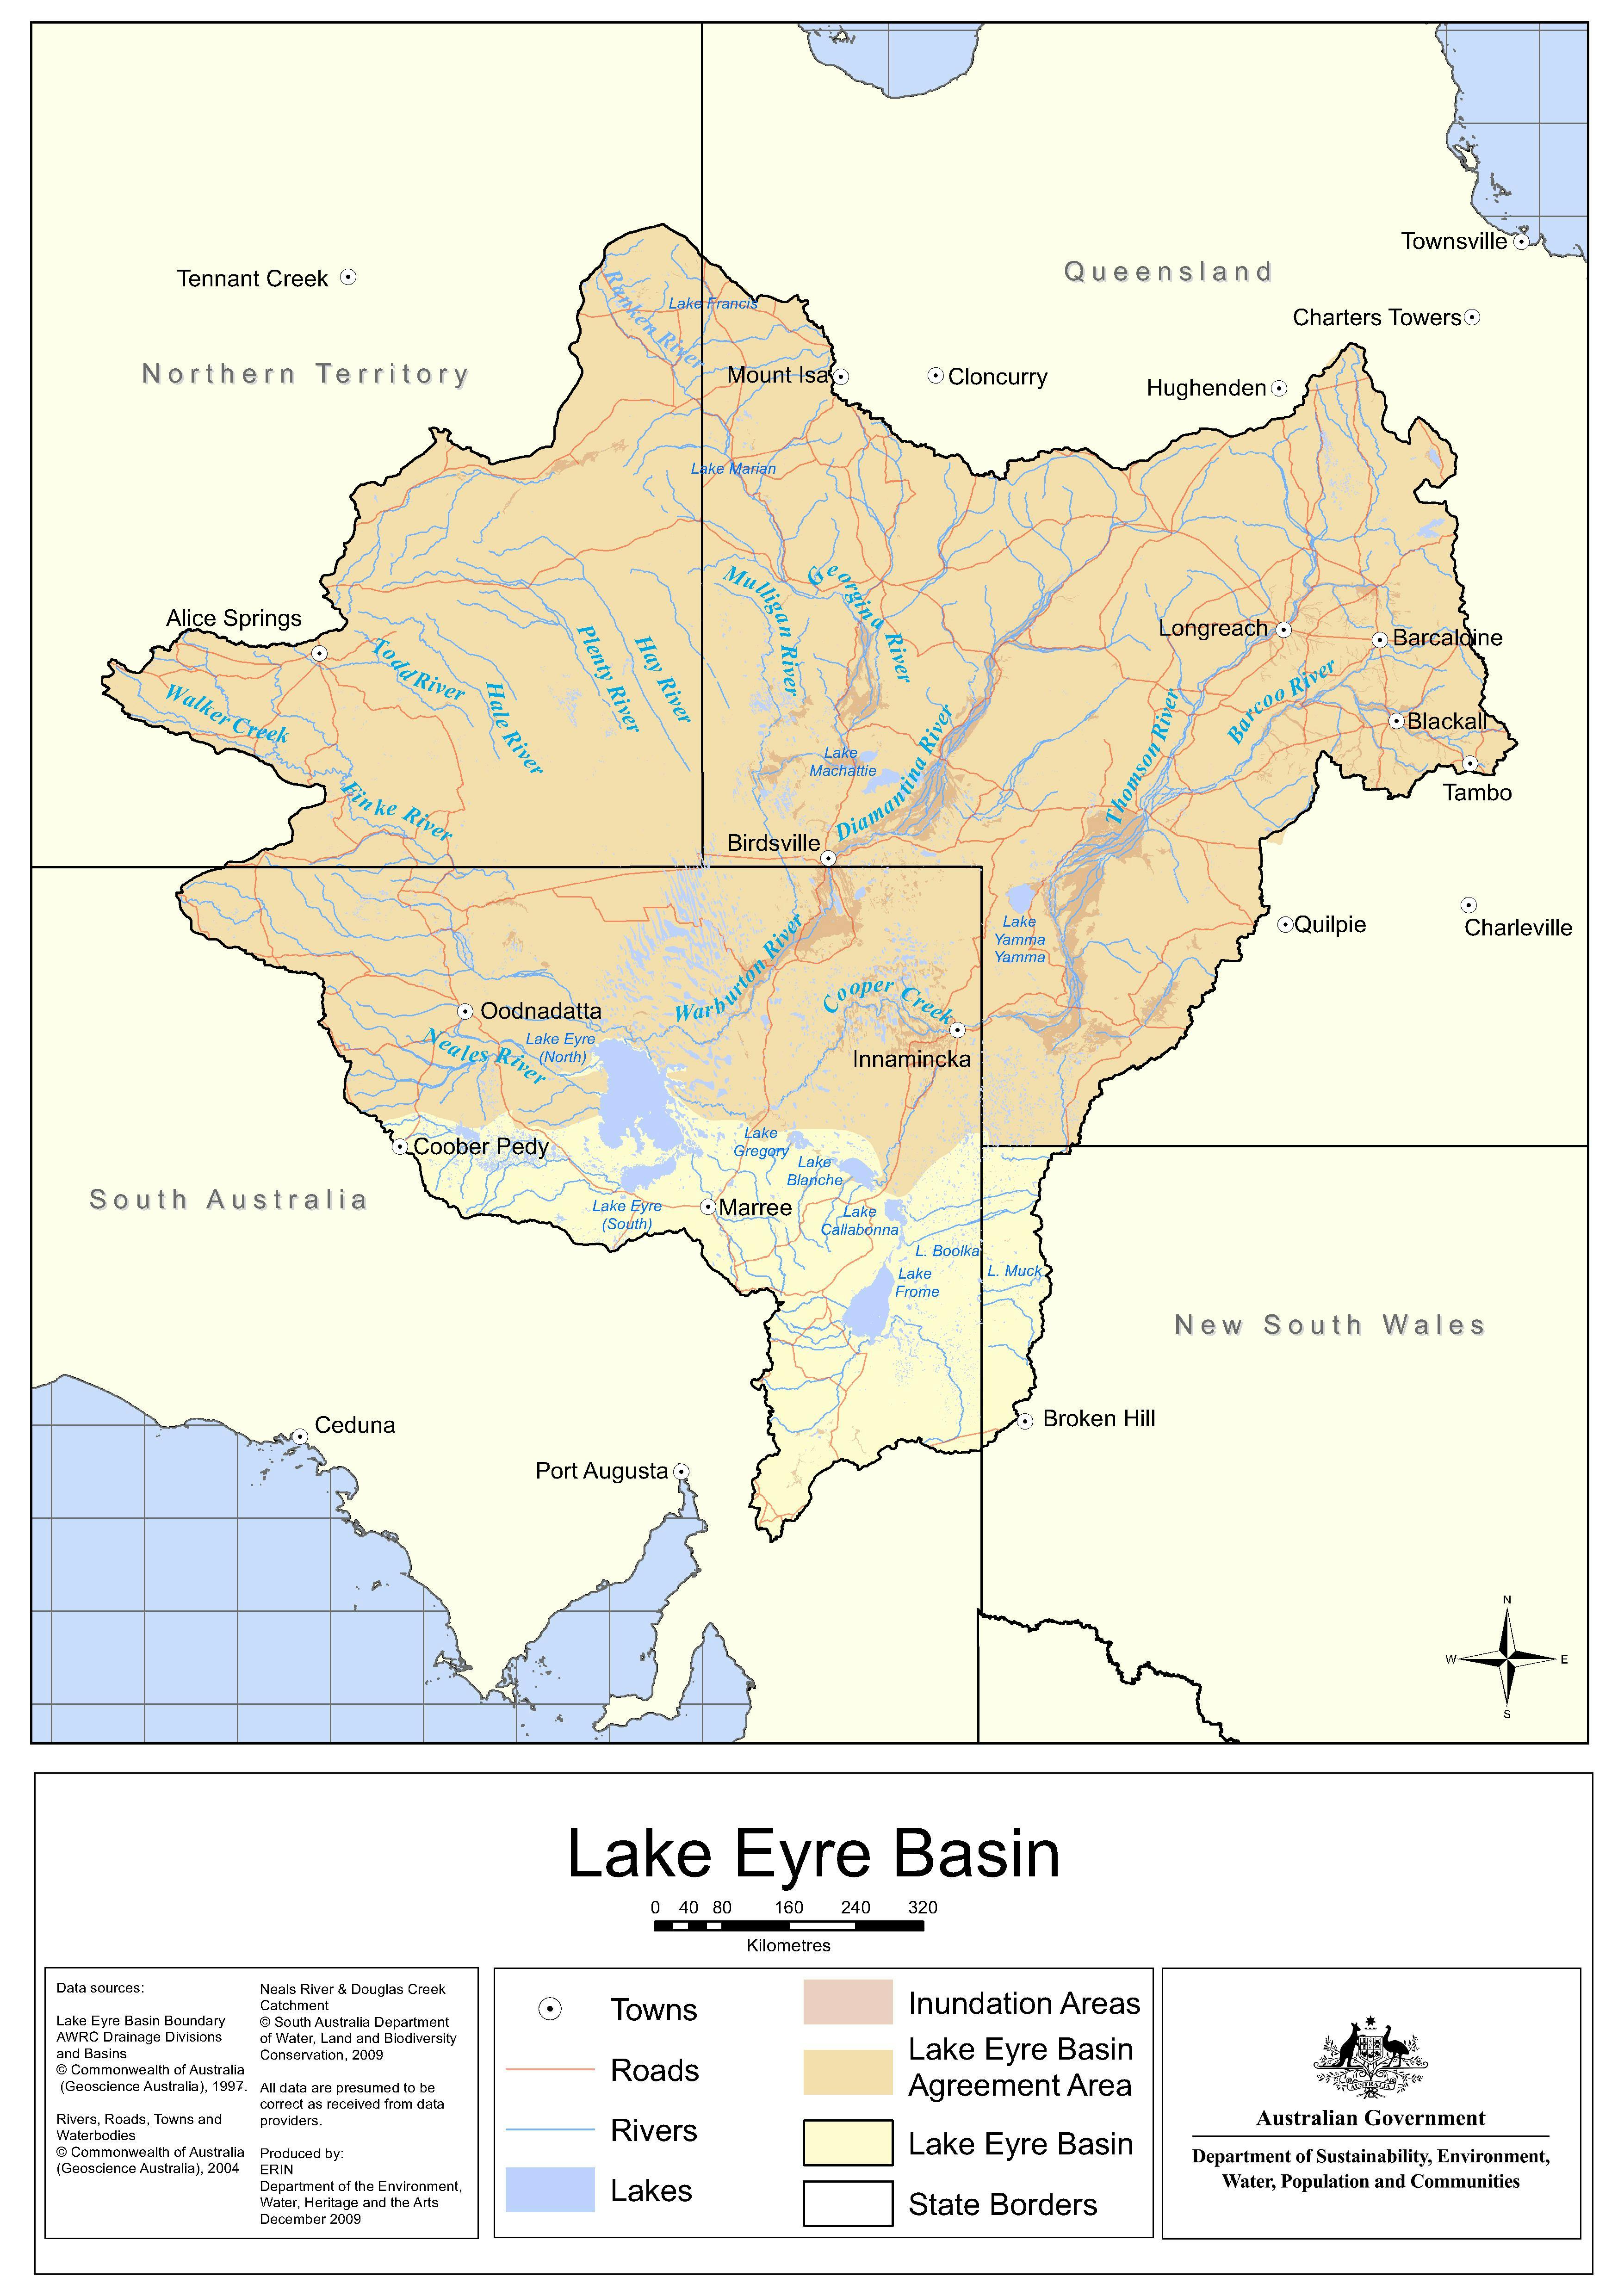 Lake Eyre Basin Agreement Area Map 2009.jpg